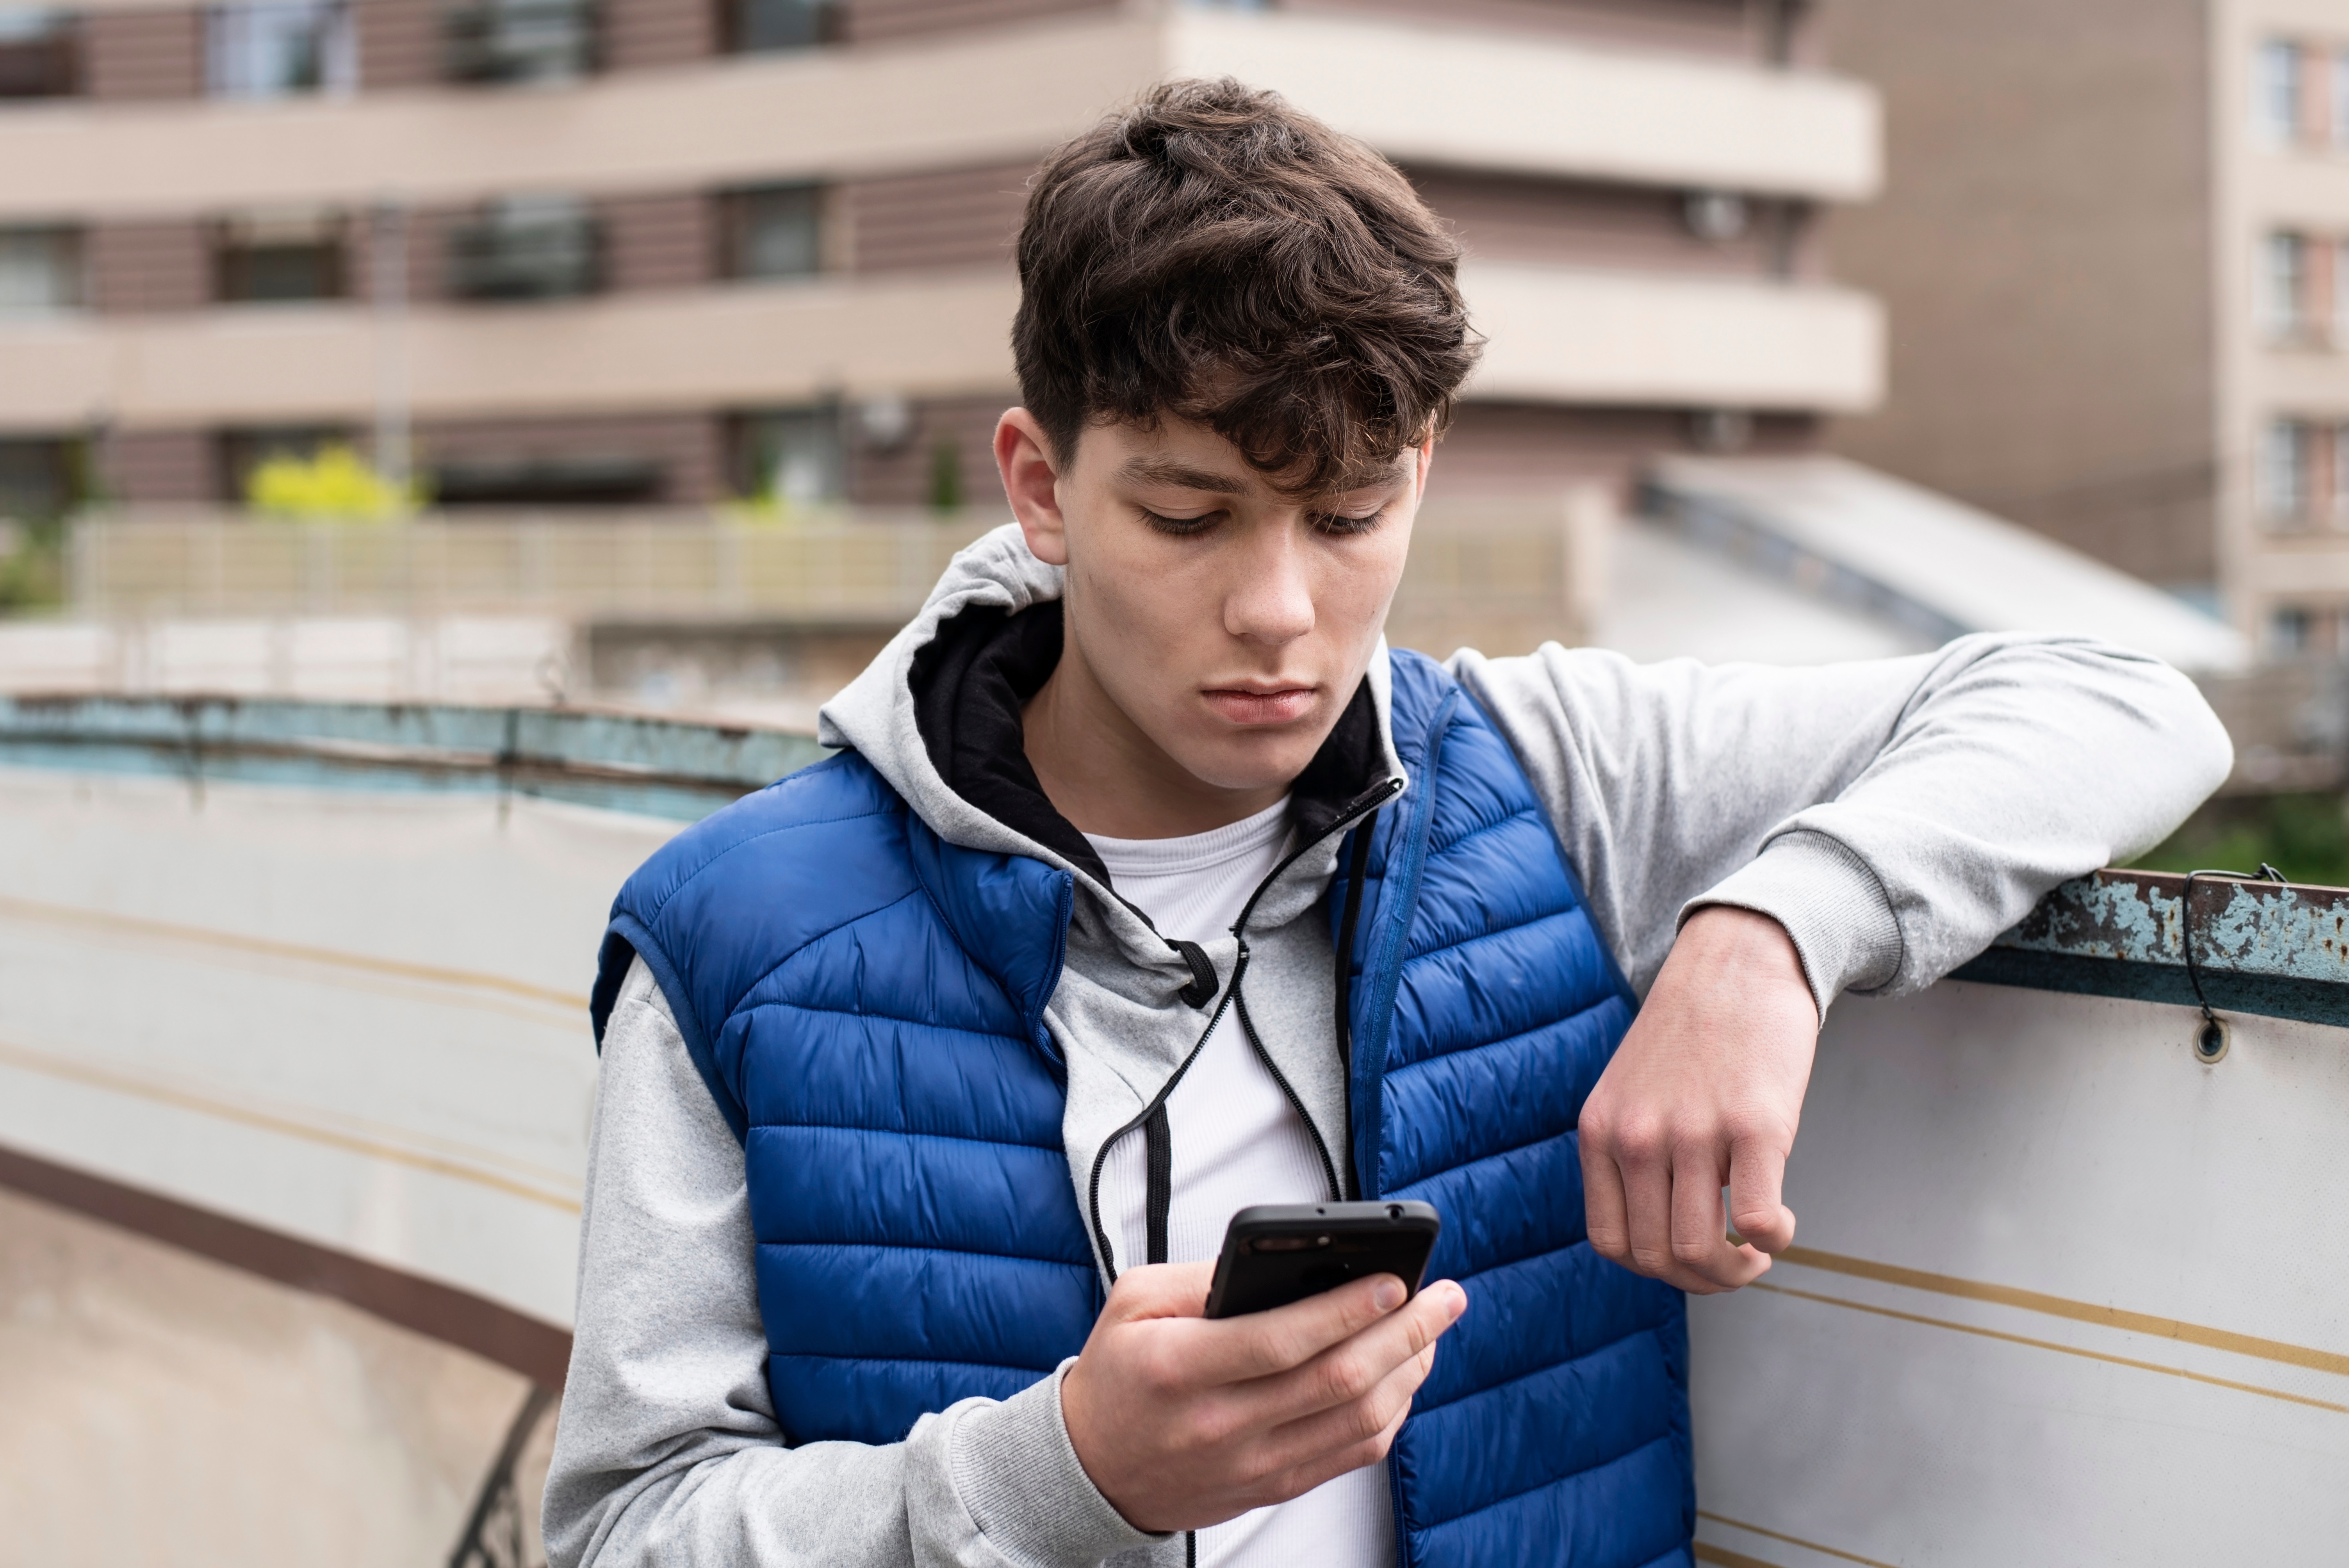 A boy texting | Source: Shutterstock